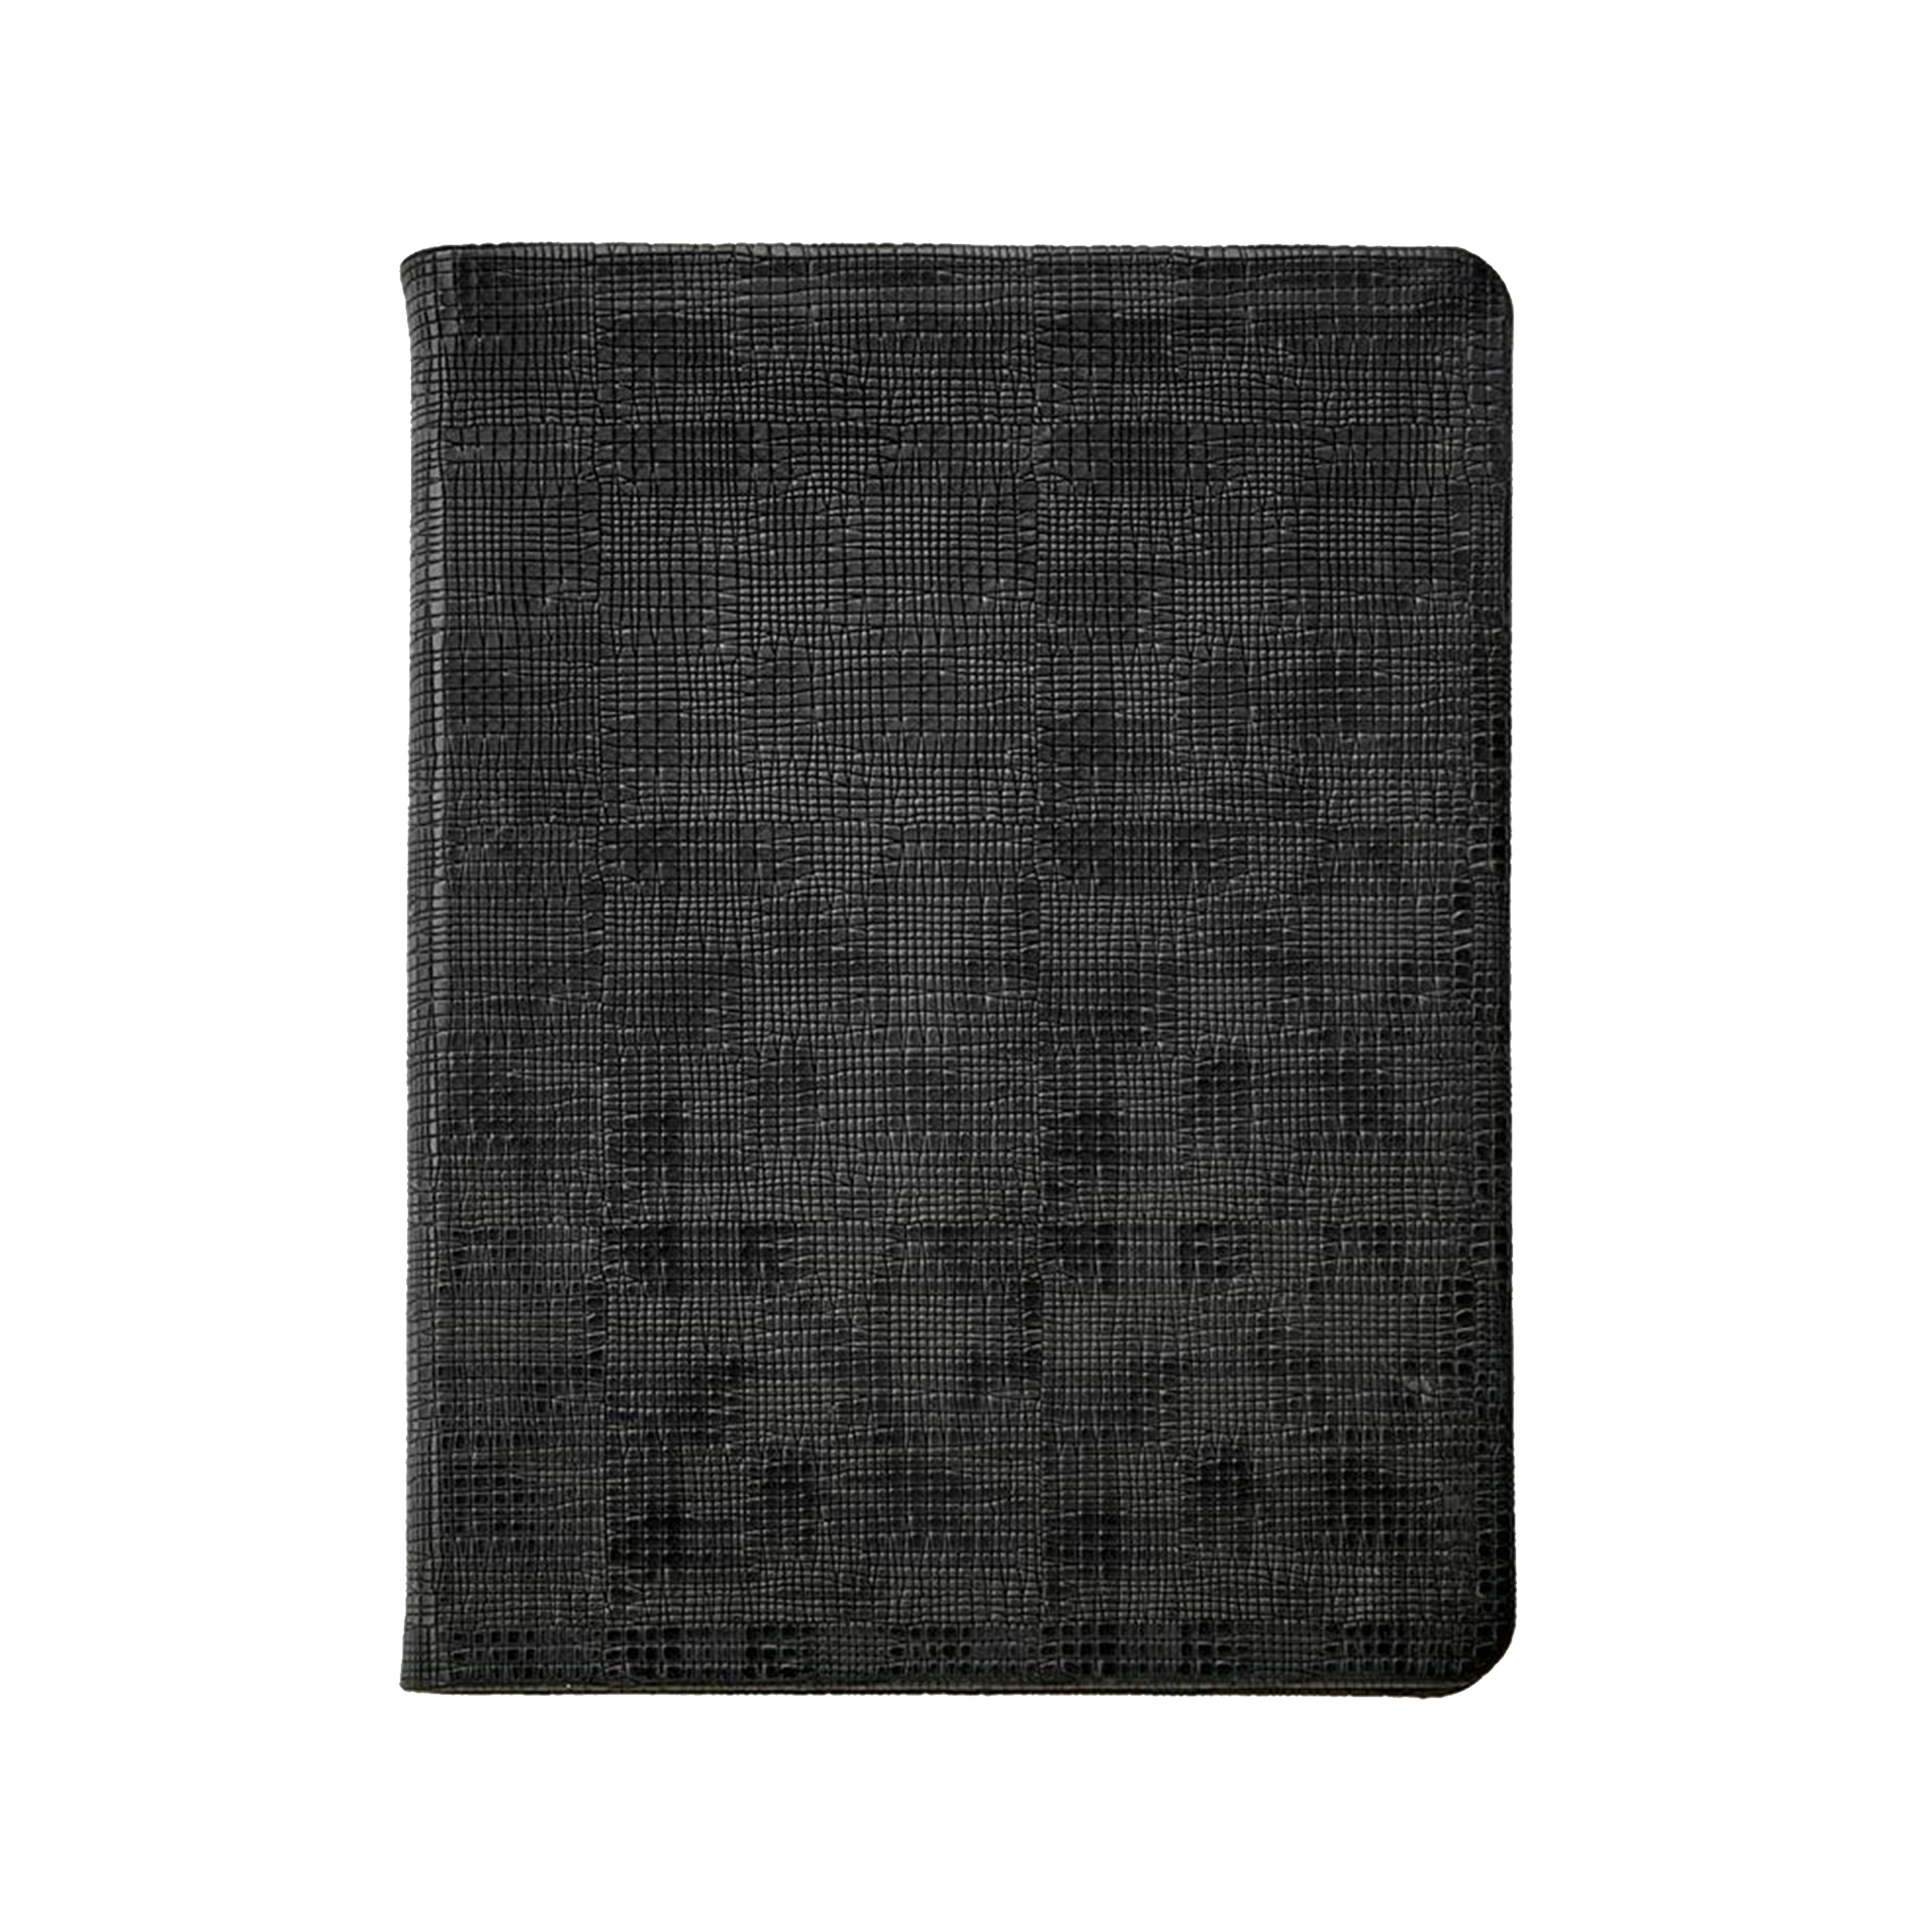 Graphic Image Medium Journal Black Plaid Leather